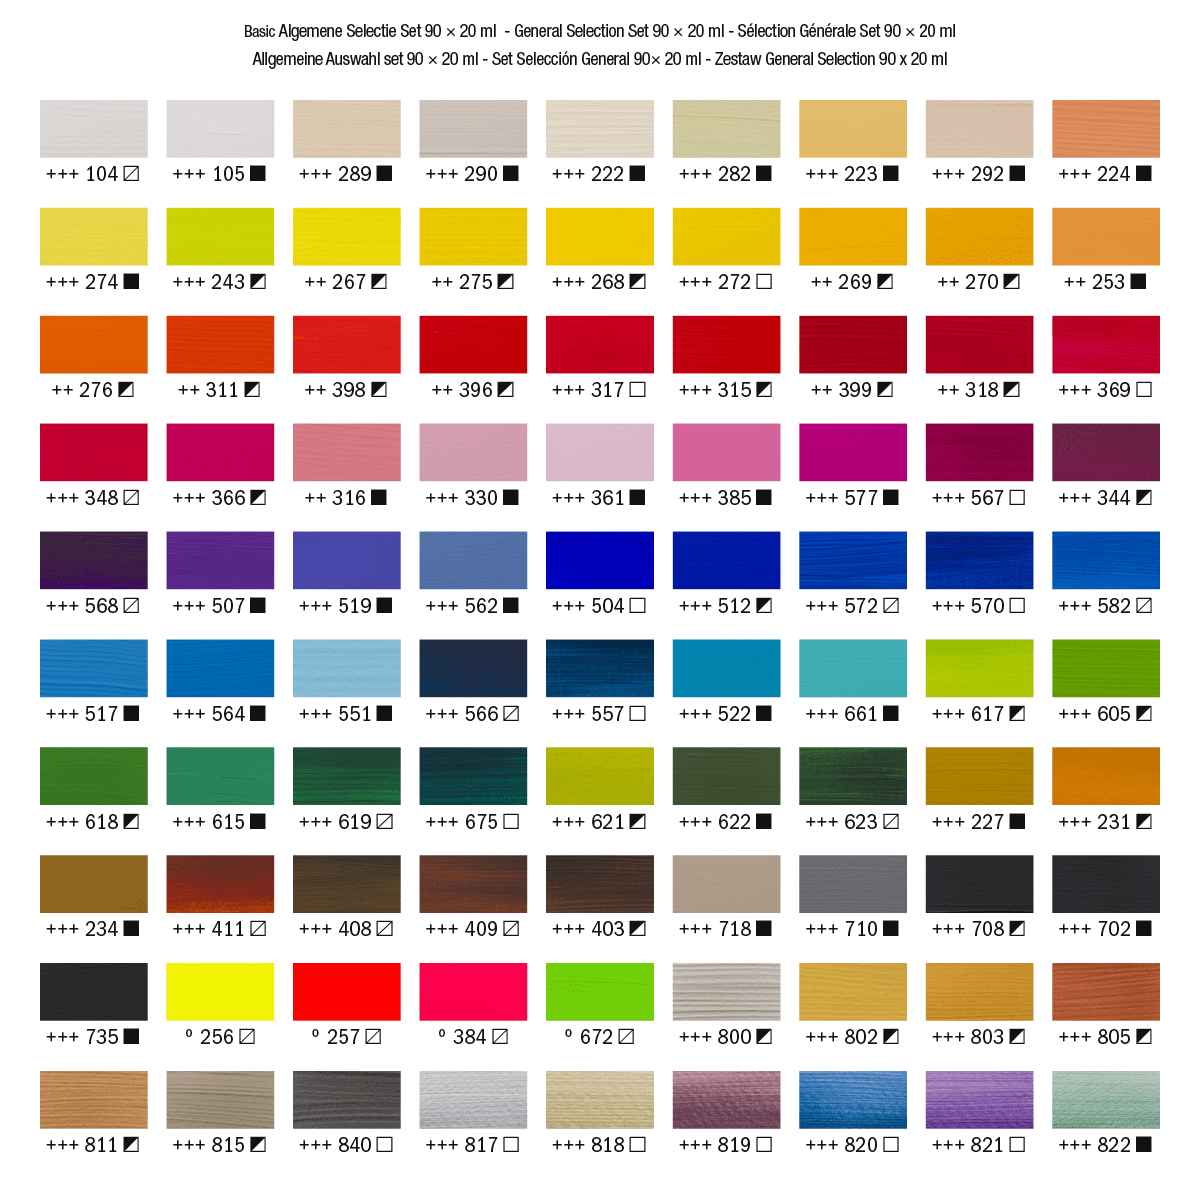 Amsterdam Acrylic Paint Set, Primary Colors Set of 5 (120mL Tubes) - Sam  Flax Atlanta